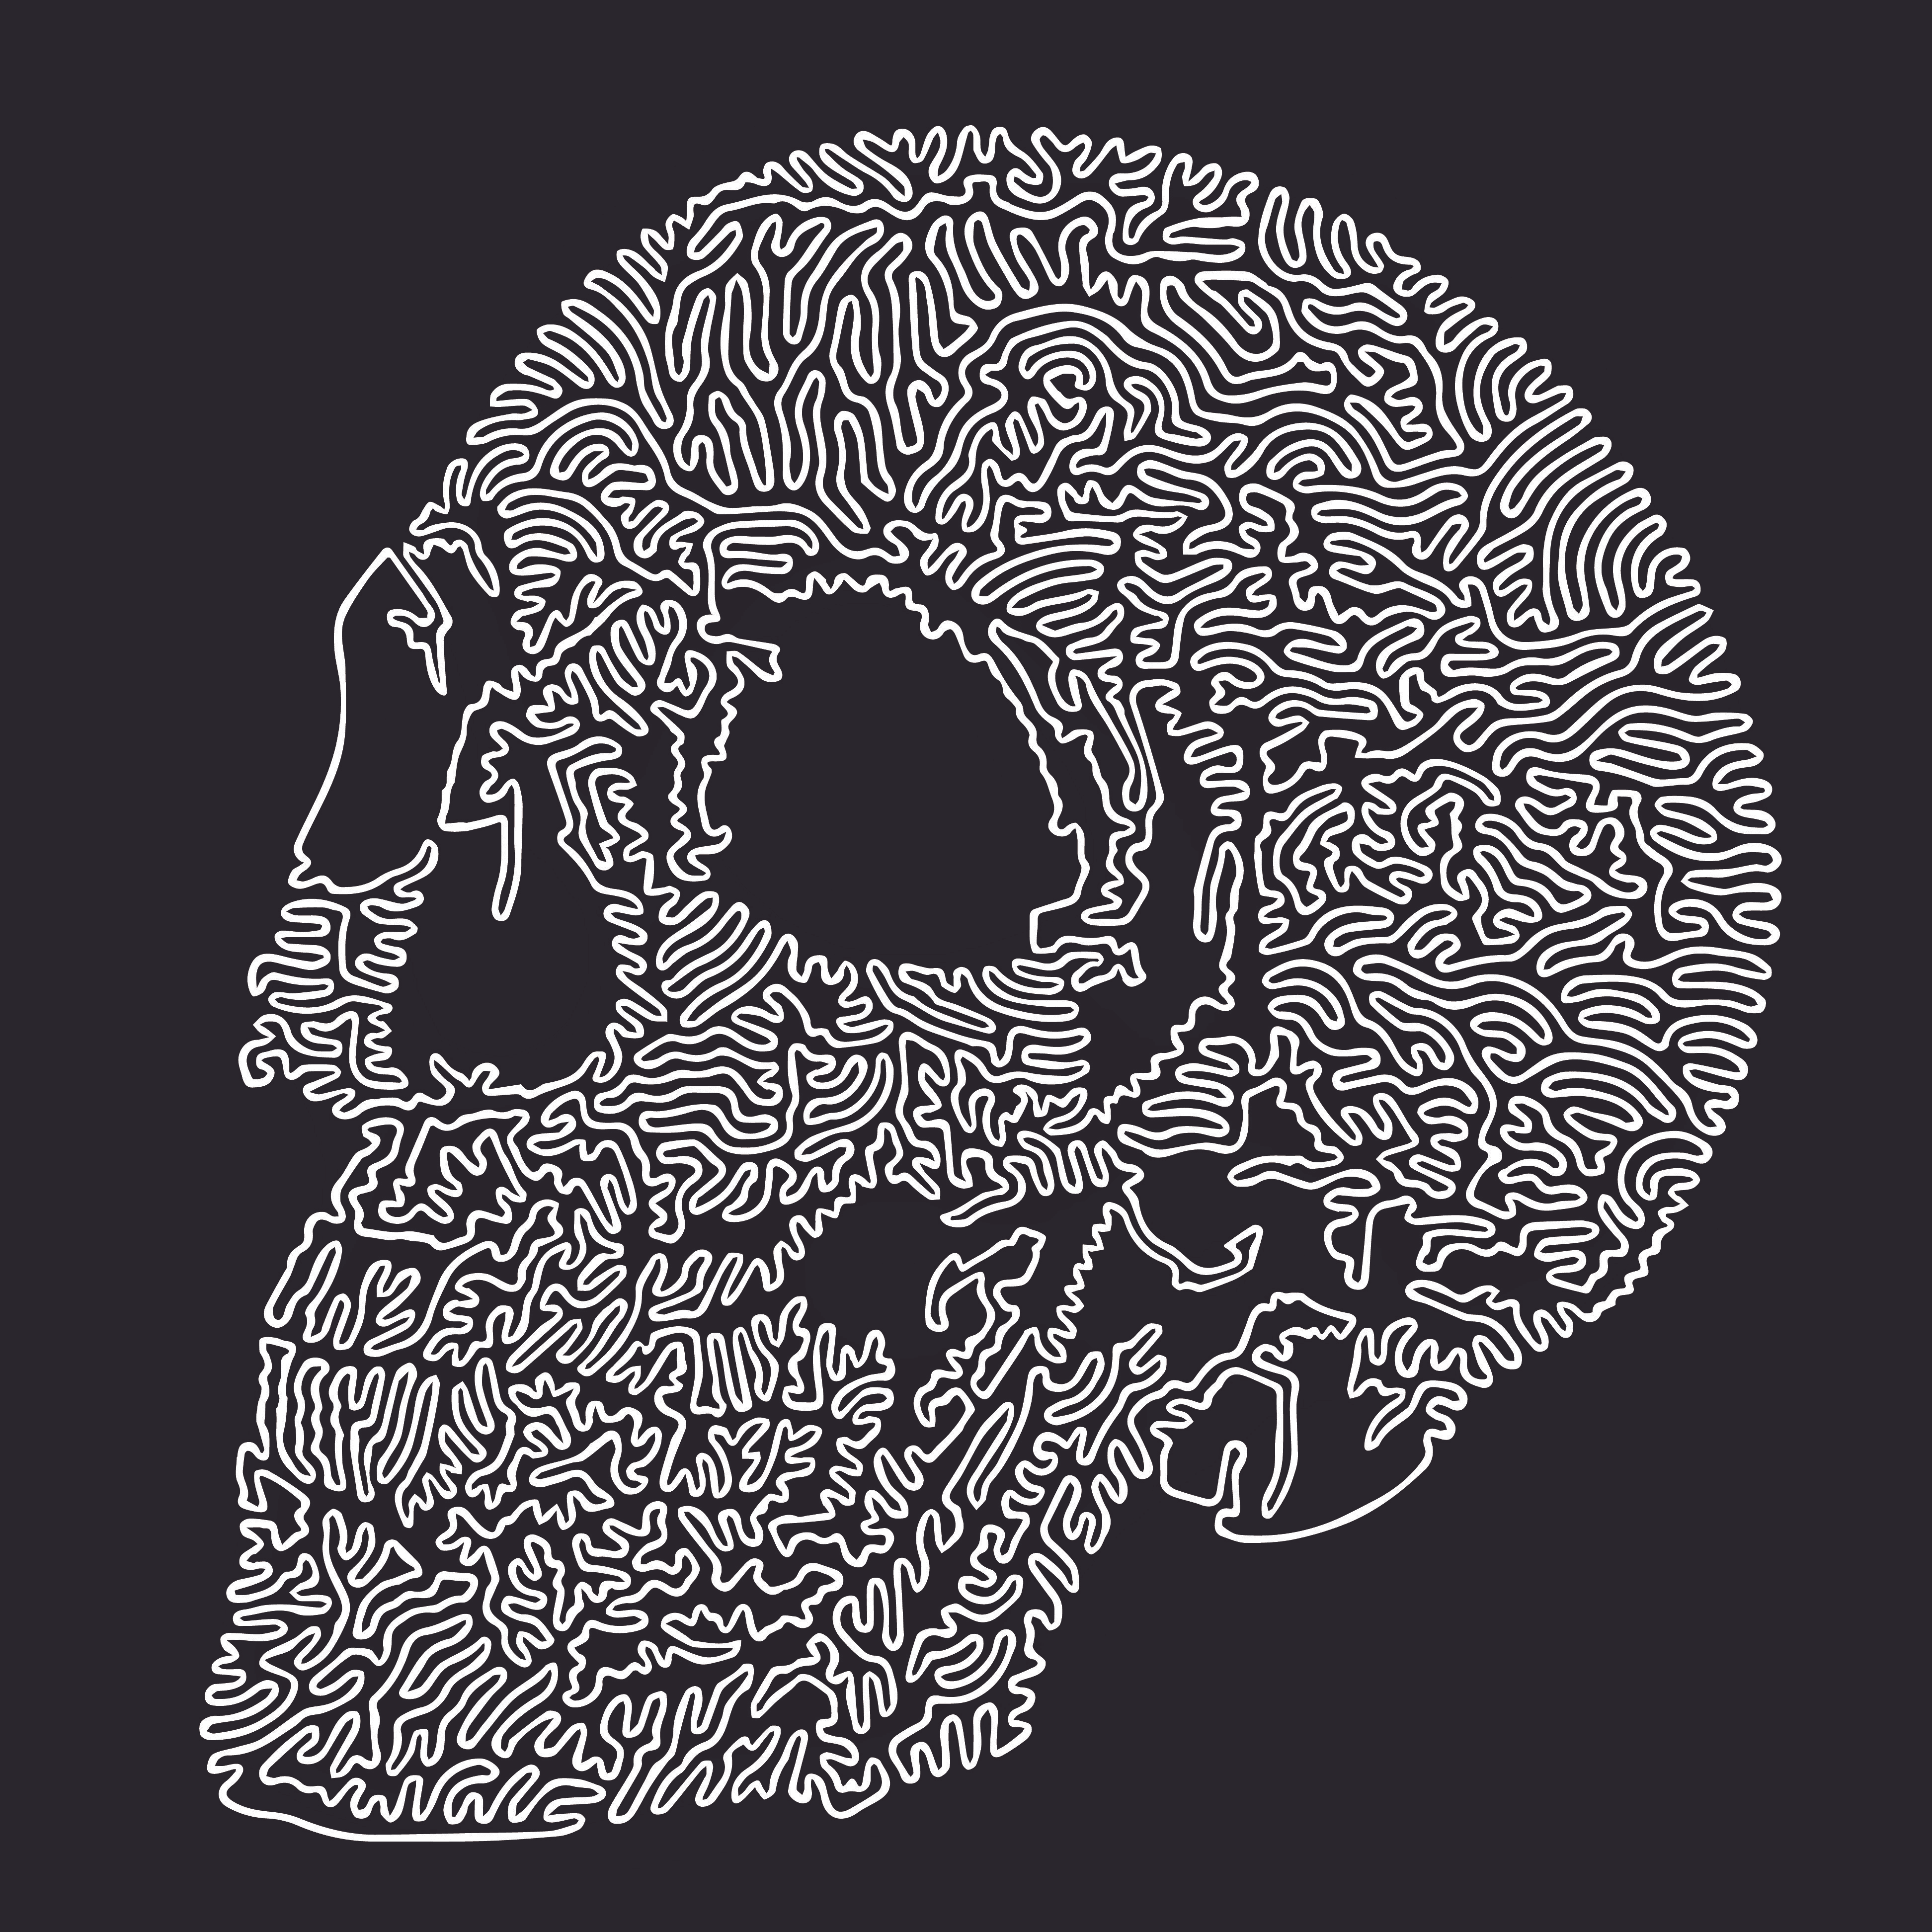 The Skull 